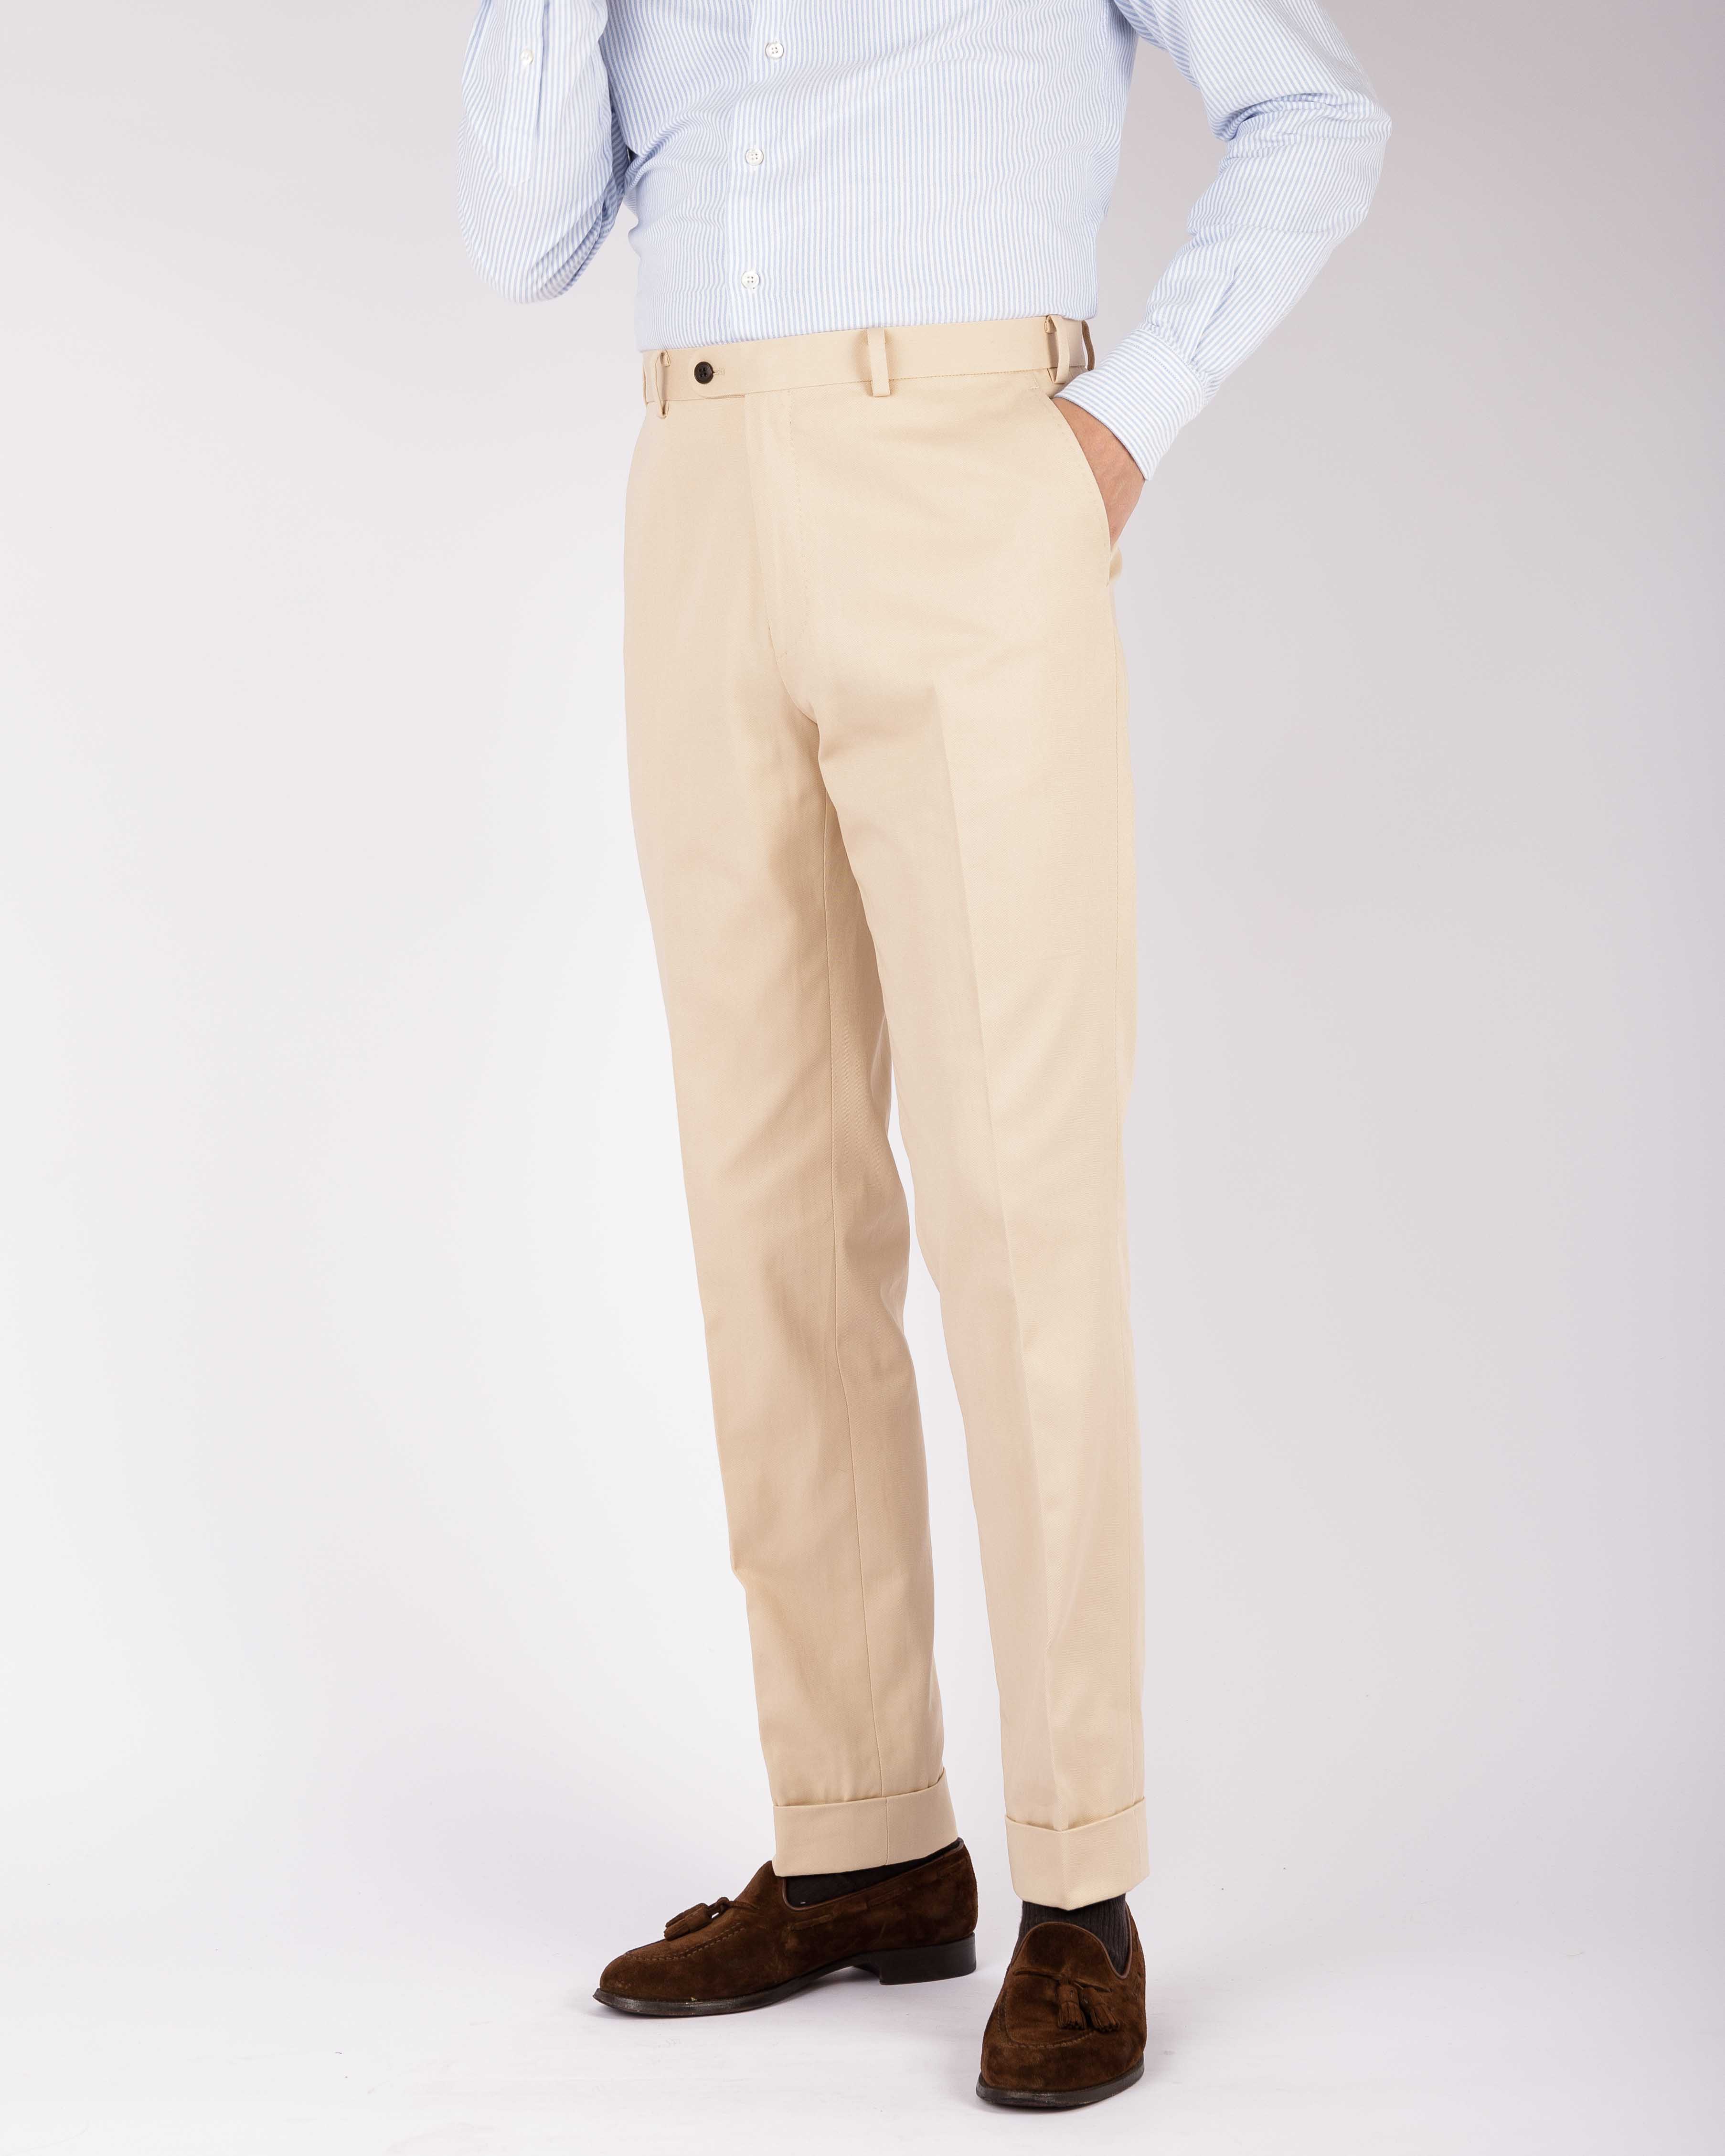 Buy Peter England Casuals Men Cream Formal Trousers Online